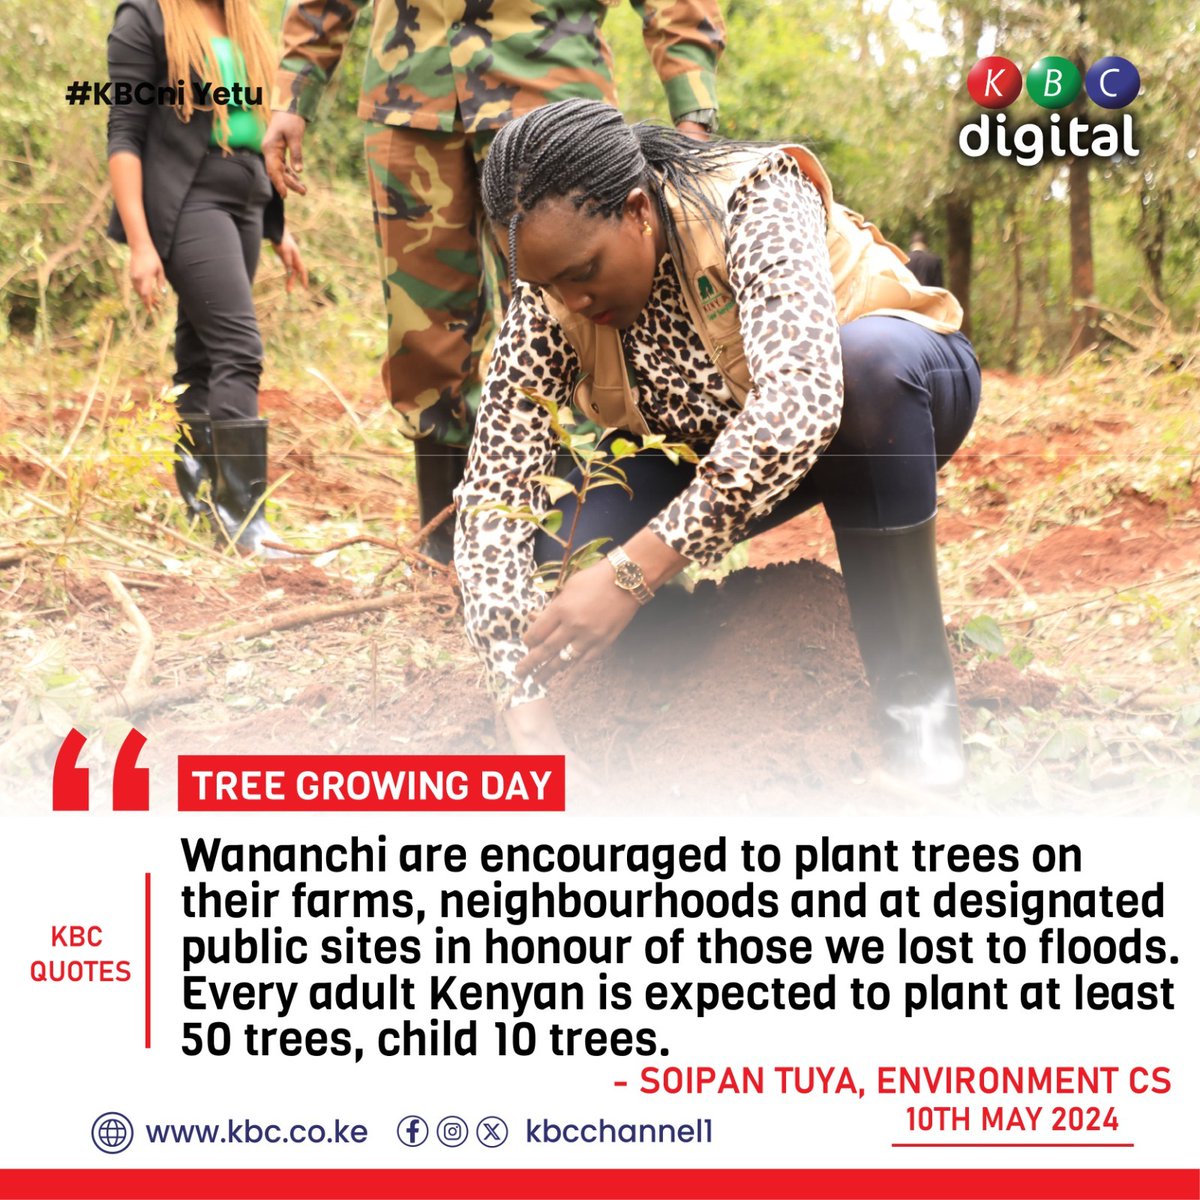 National Tree Growing Day
#JazaMiti
#15BillionTrees